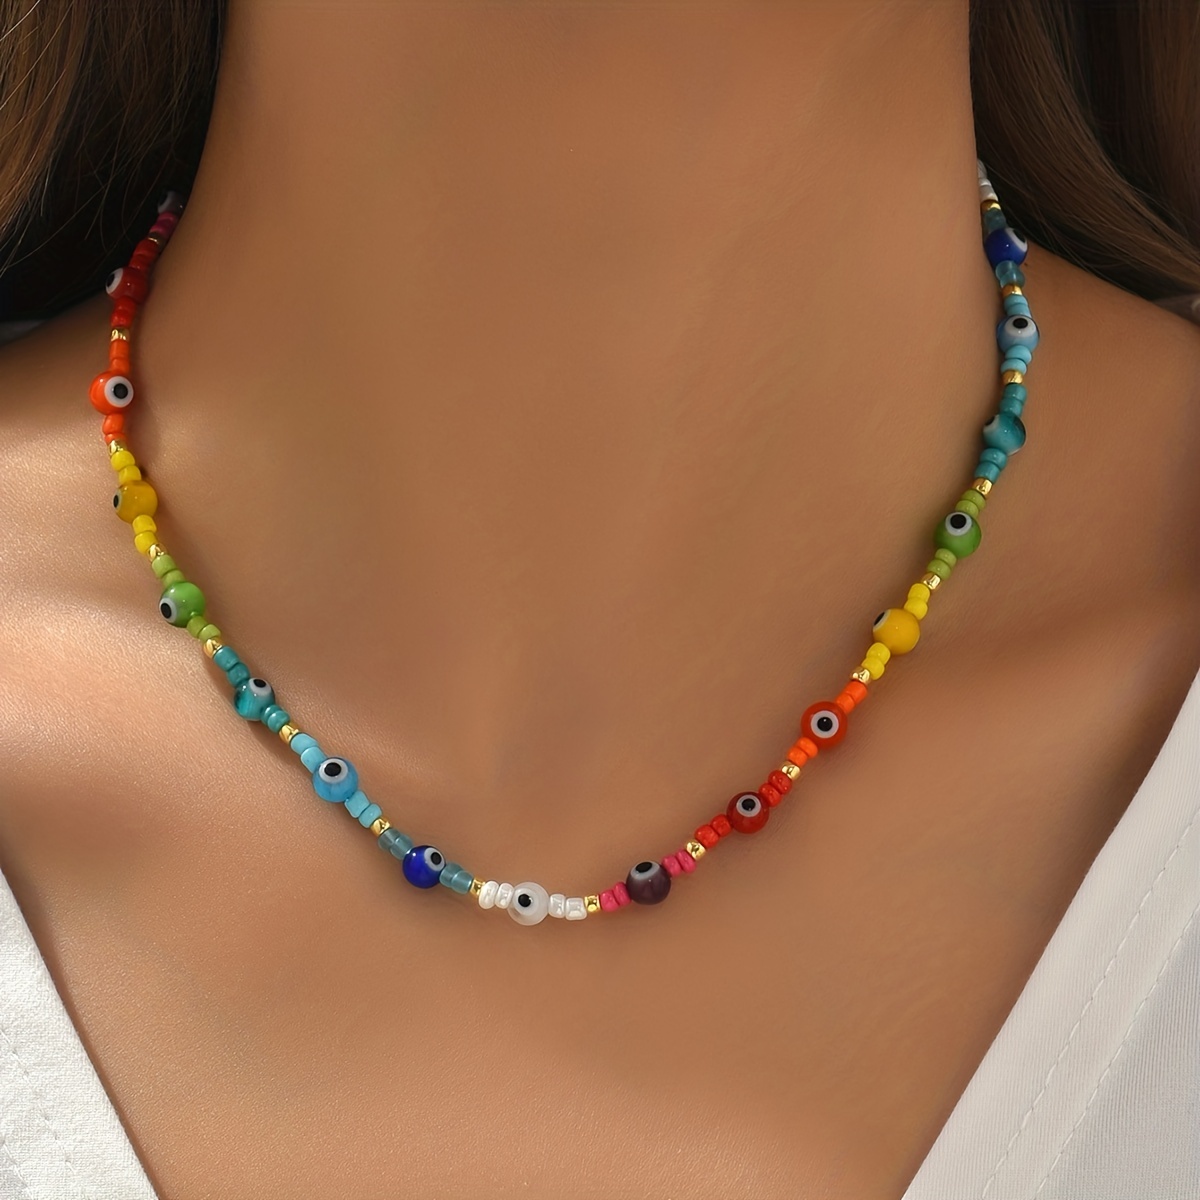 A Random Colorful Beaded Fashion Long Necklace